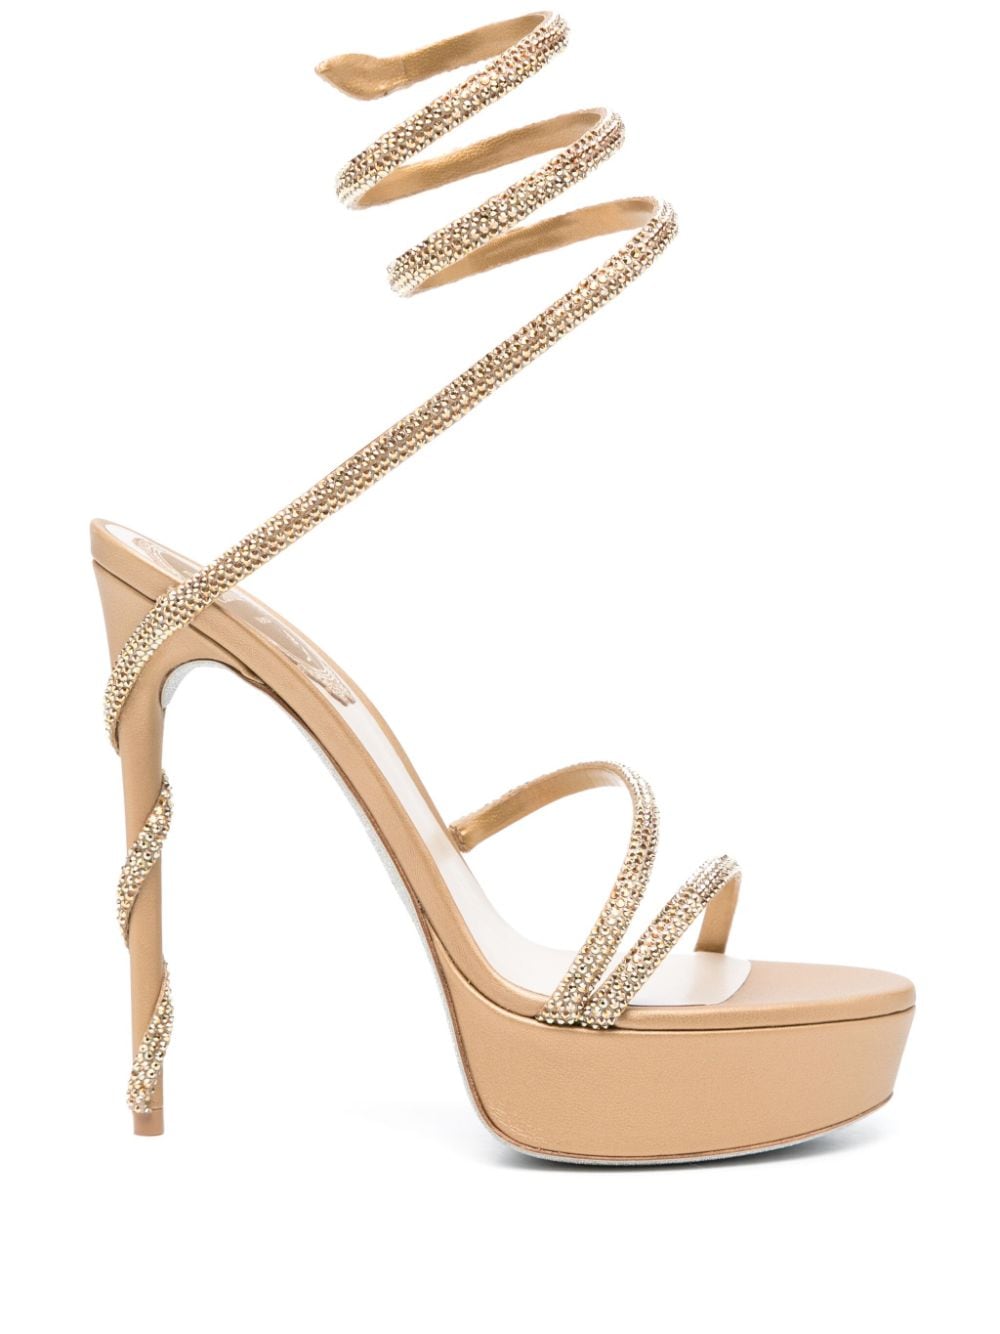 René Caovilla 145mm rhinestone-embellished sandals Gold